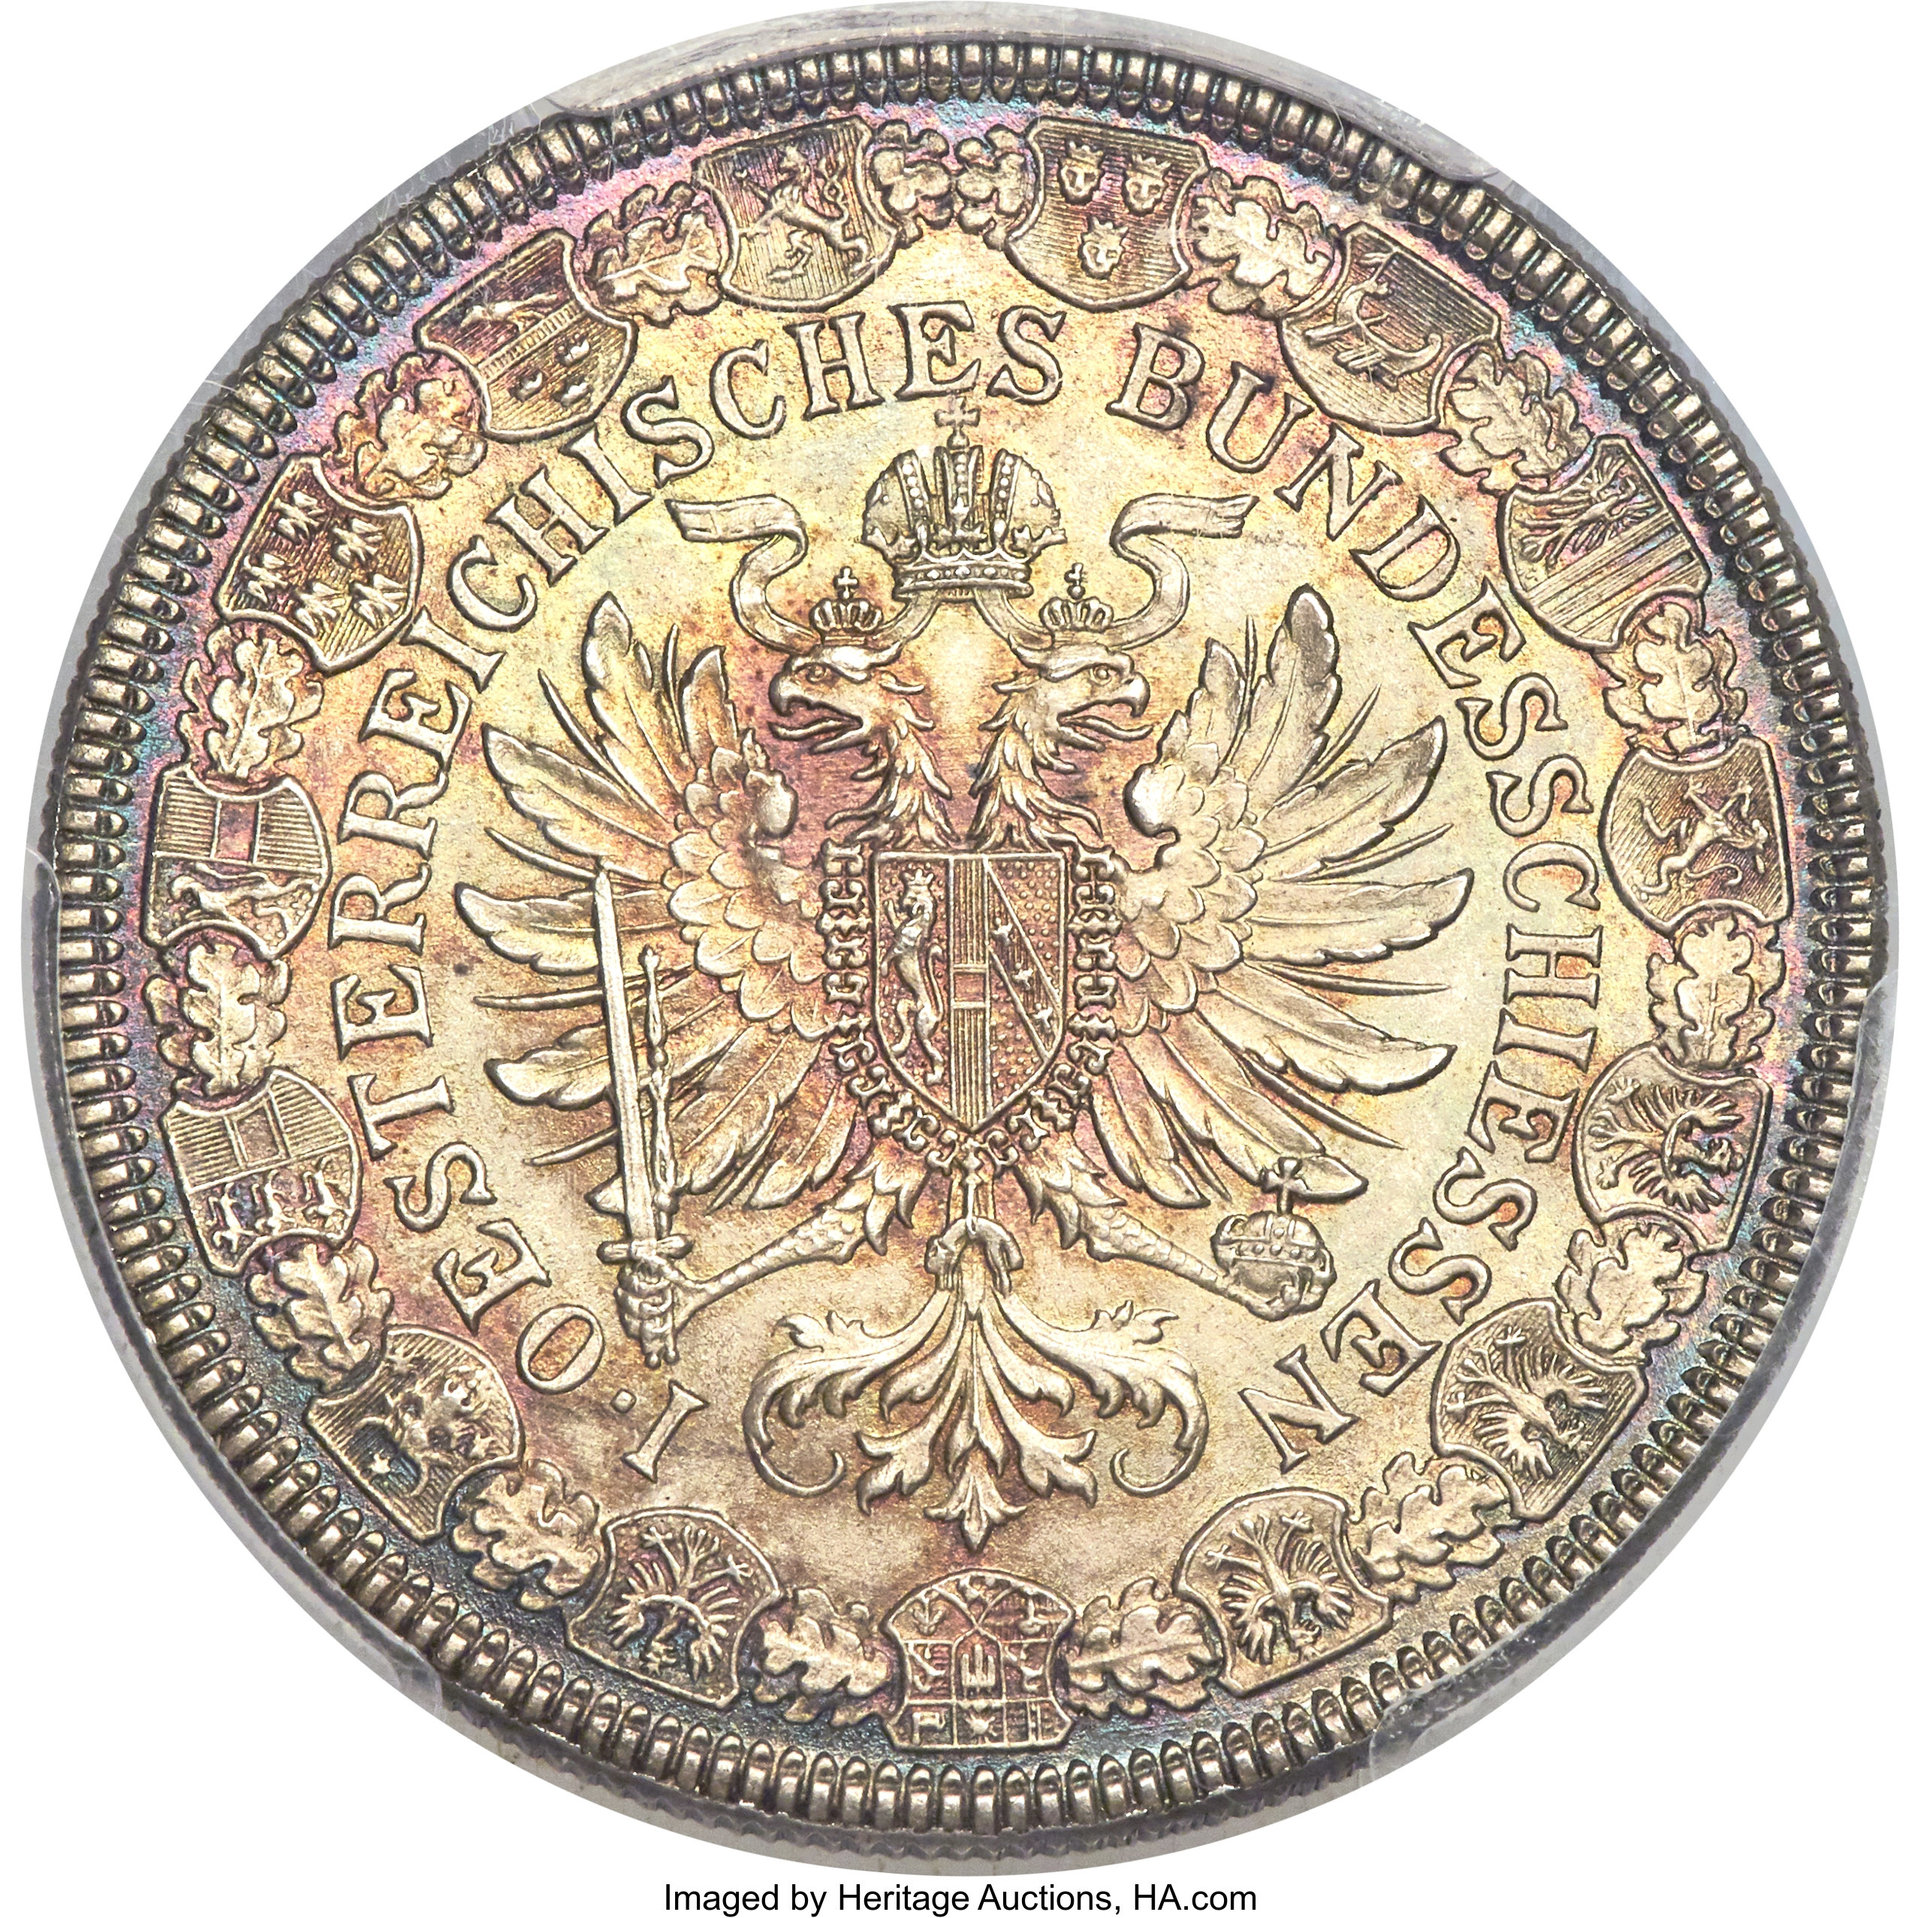 Austria, Franz Joseph I silver Shooting Festival Medal (aka 2 Florin) 1880 MS66 PCGS_LR_01.jpg